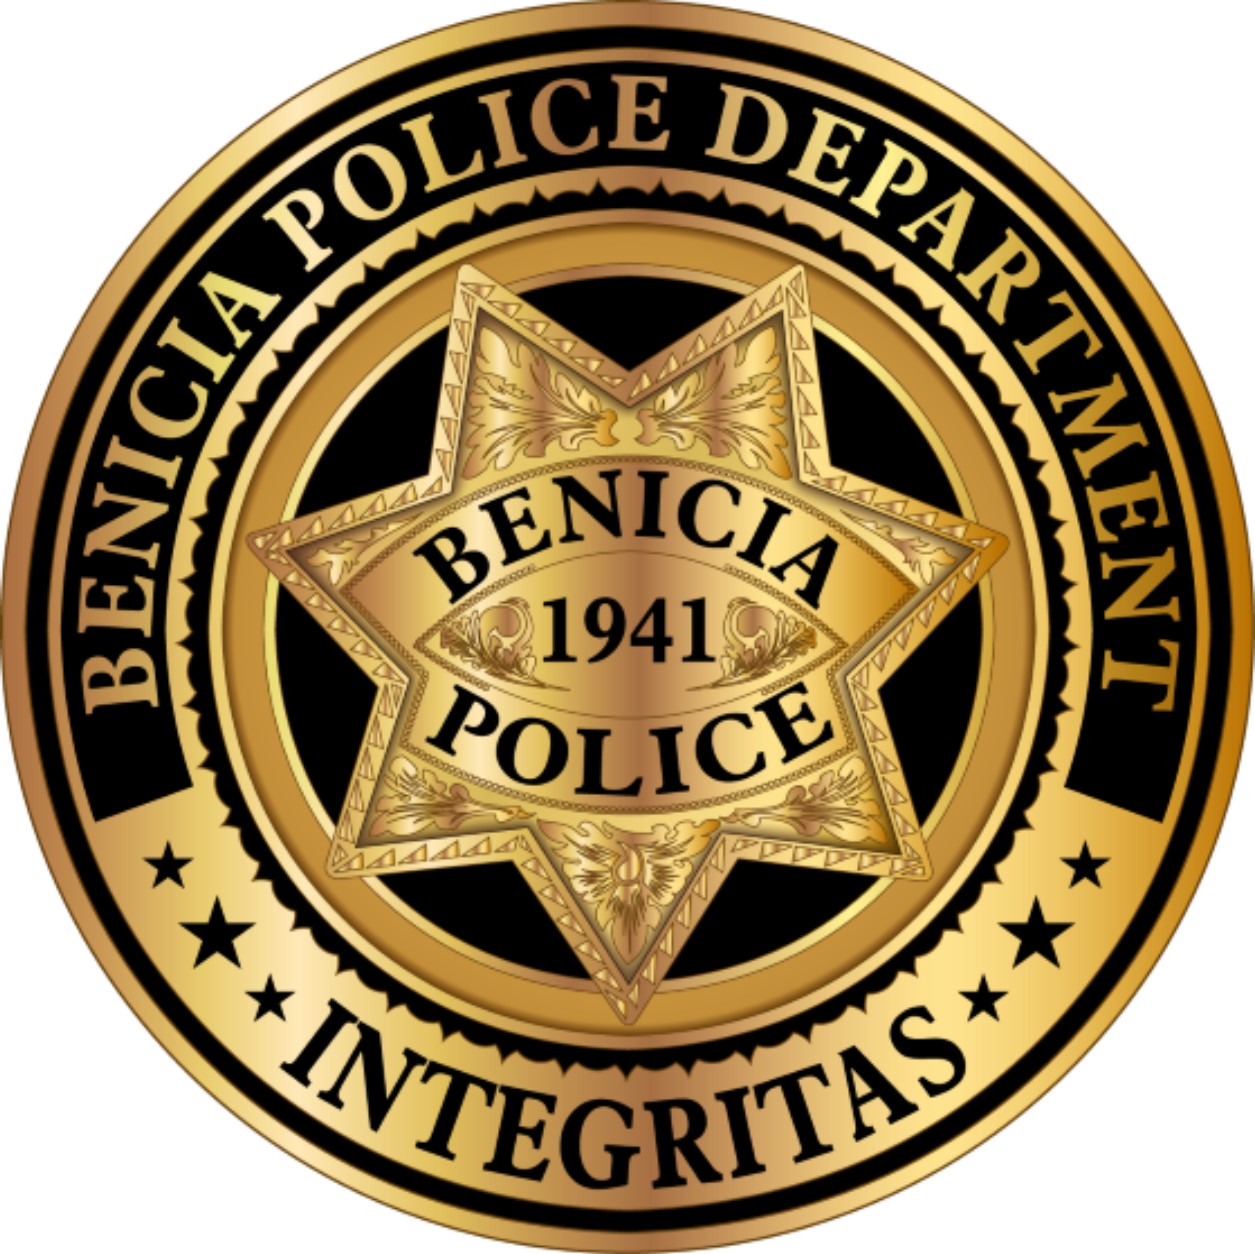 Benicia PD Logo